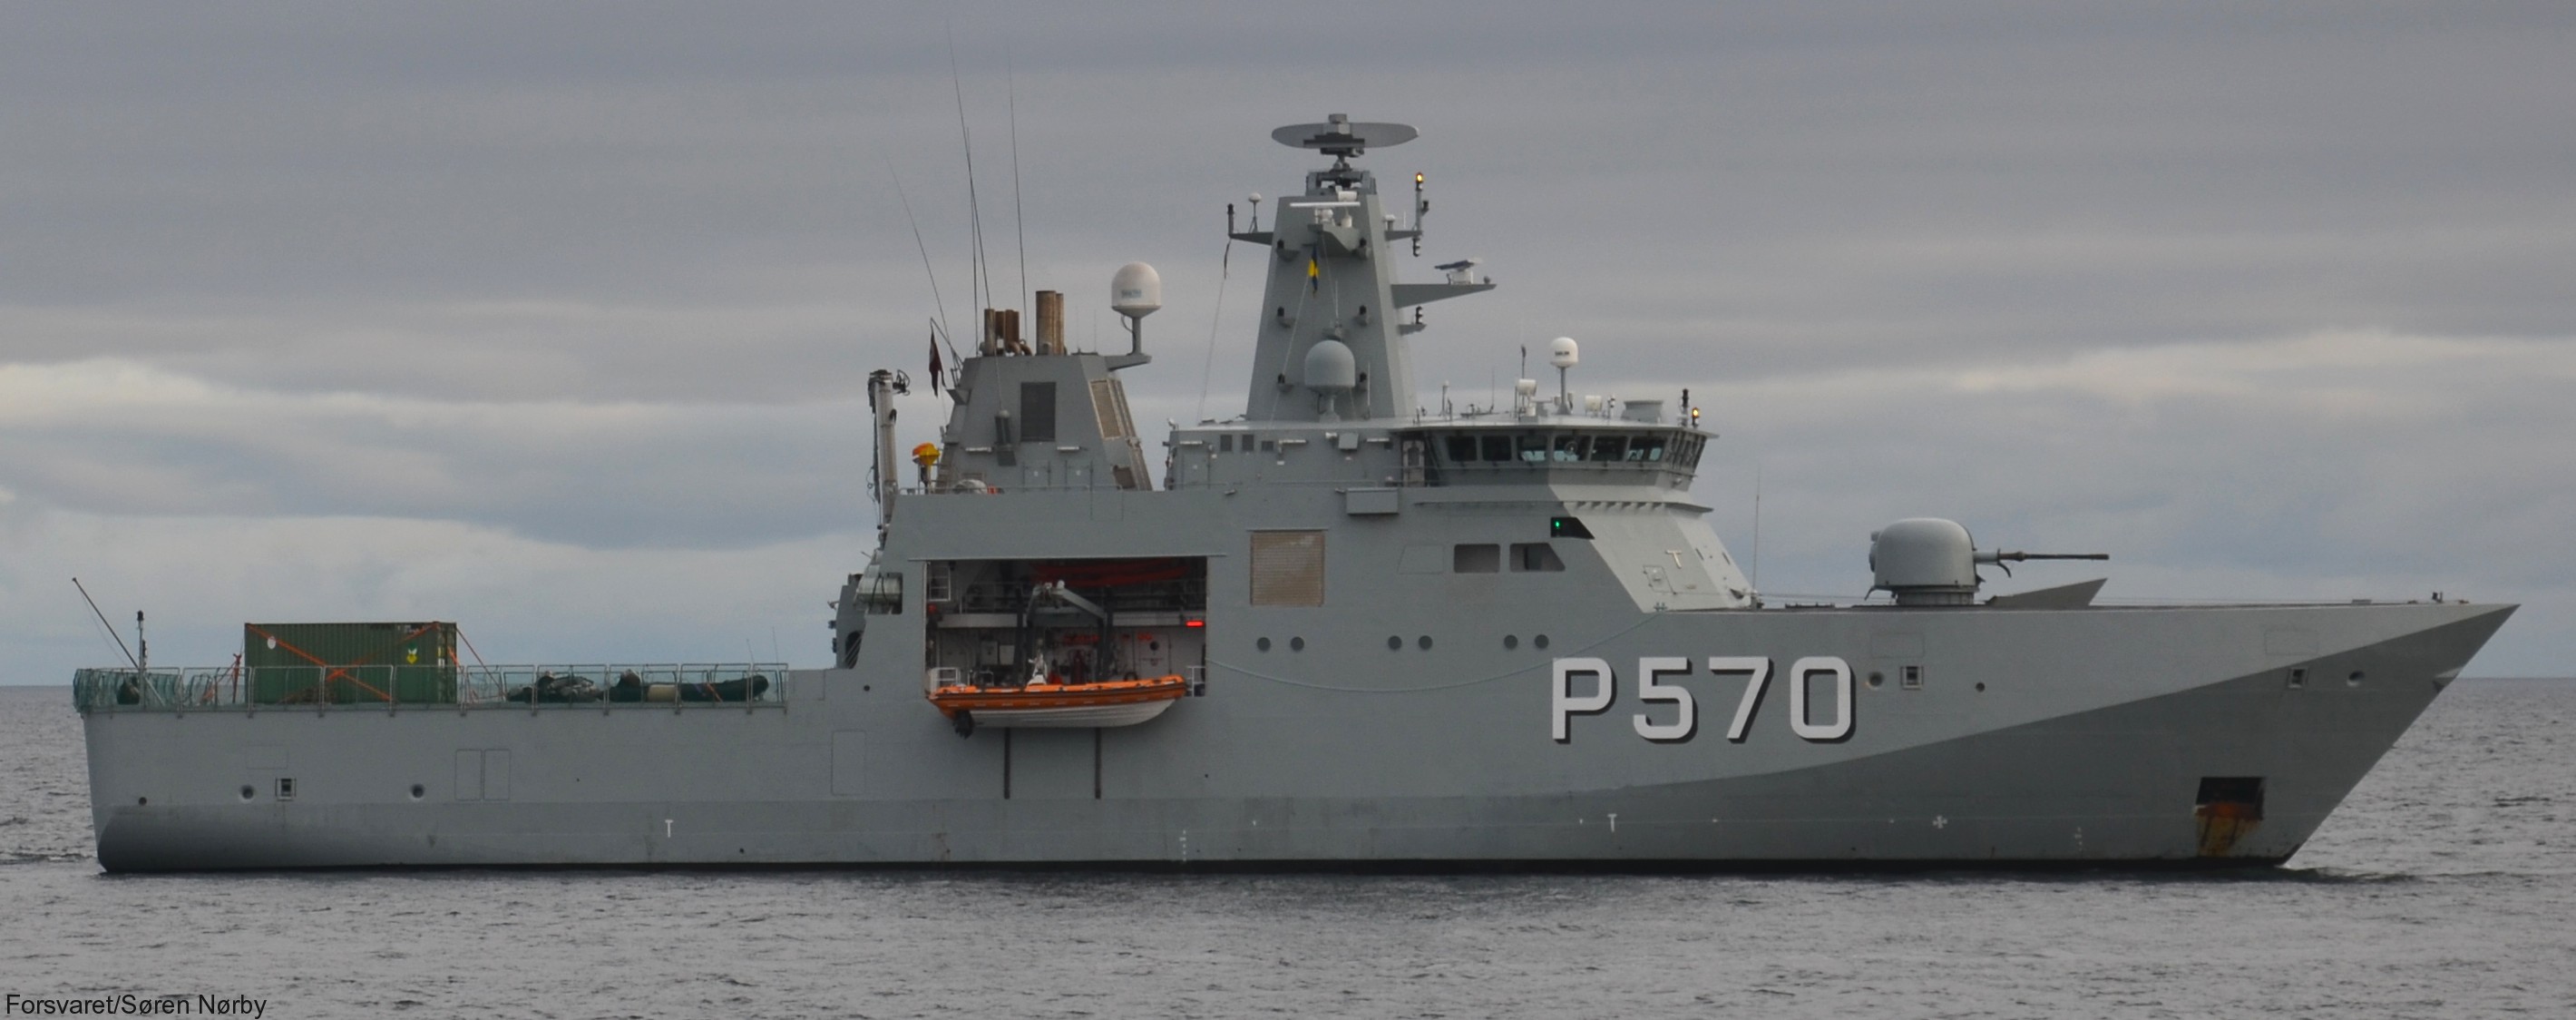 p-570 hdms knud rasmussen class offshore patrol vessel royal danish navy inspektionsfartøj 06